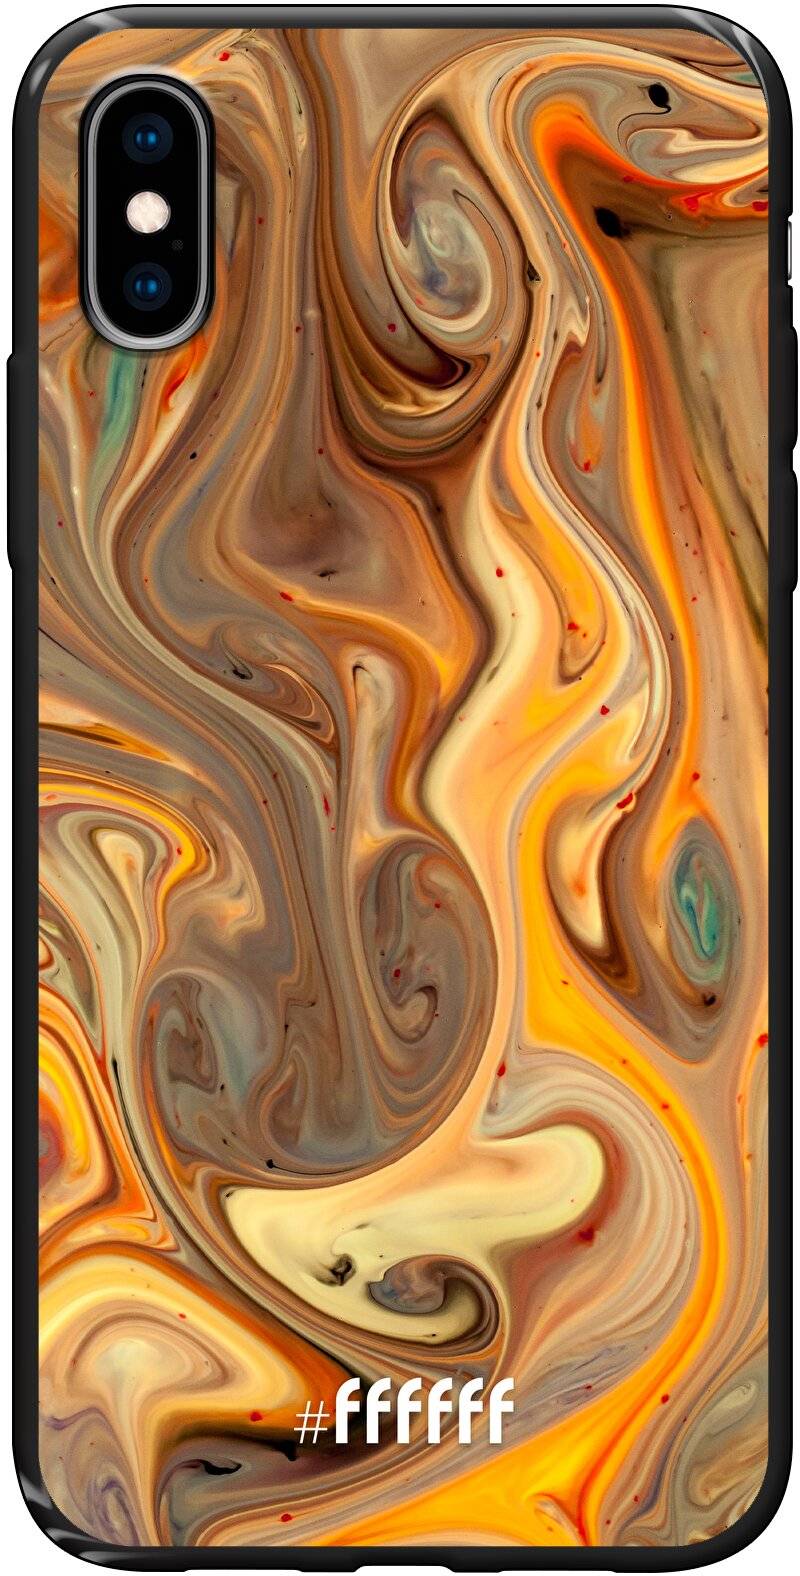 Brownie Caramel iPhone X